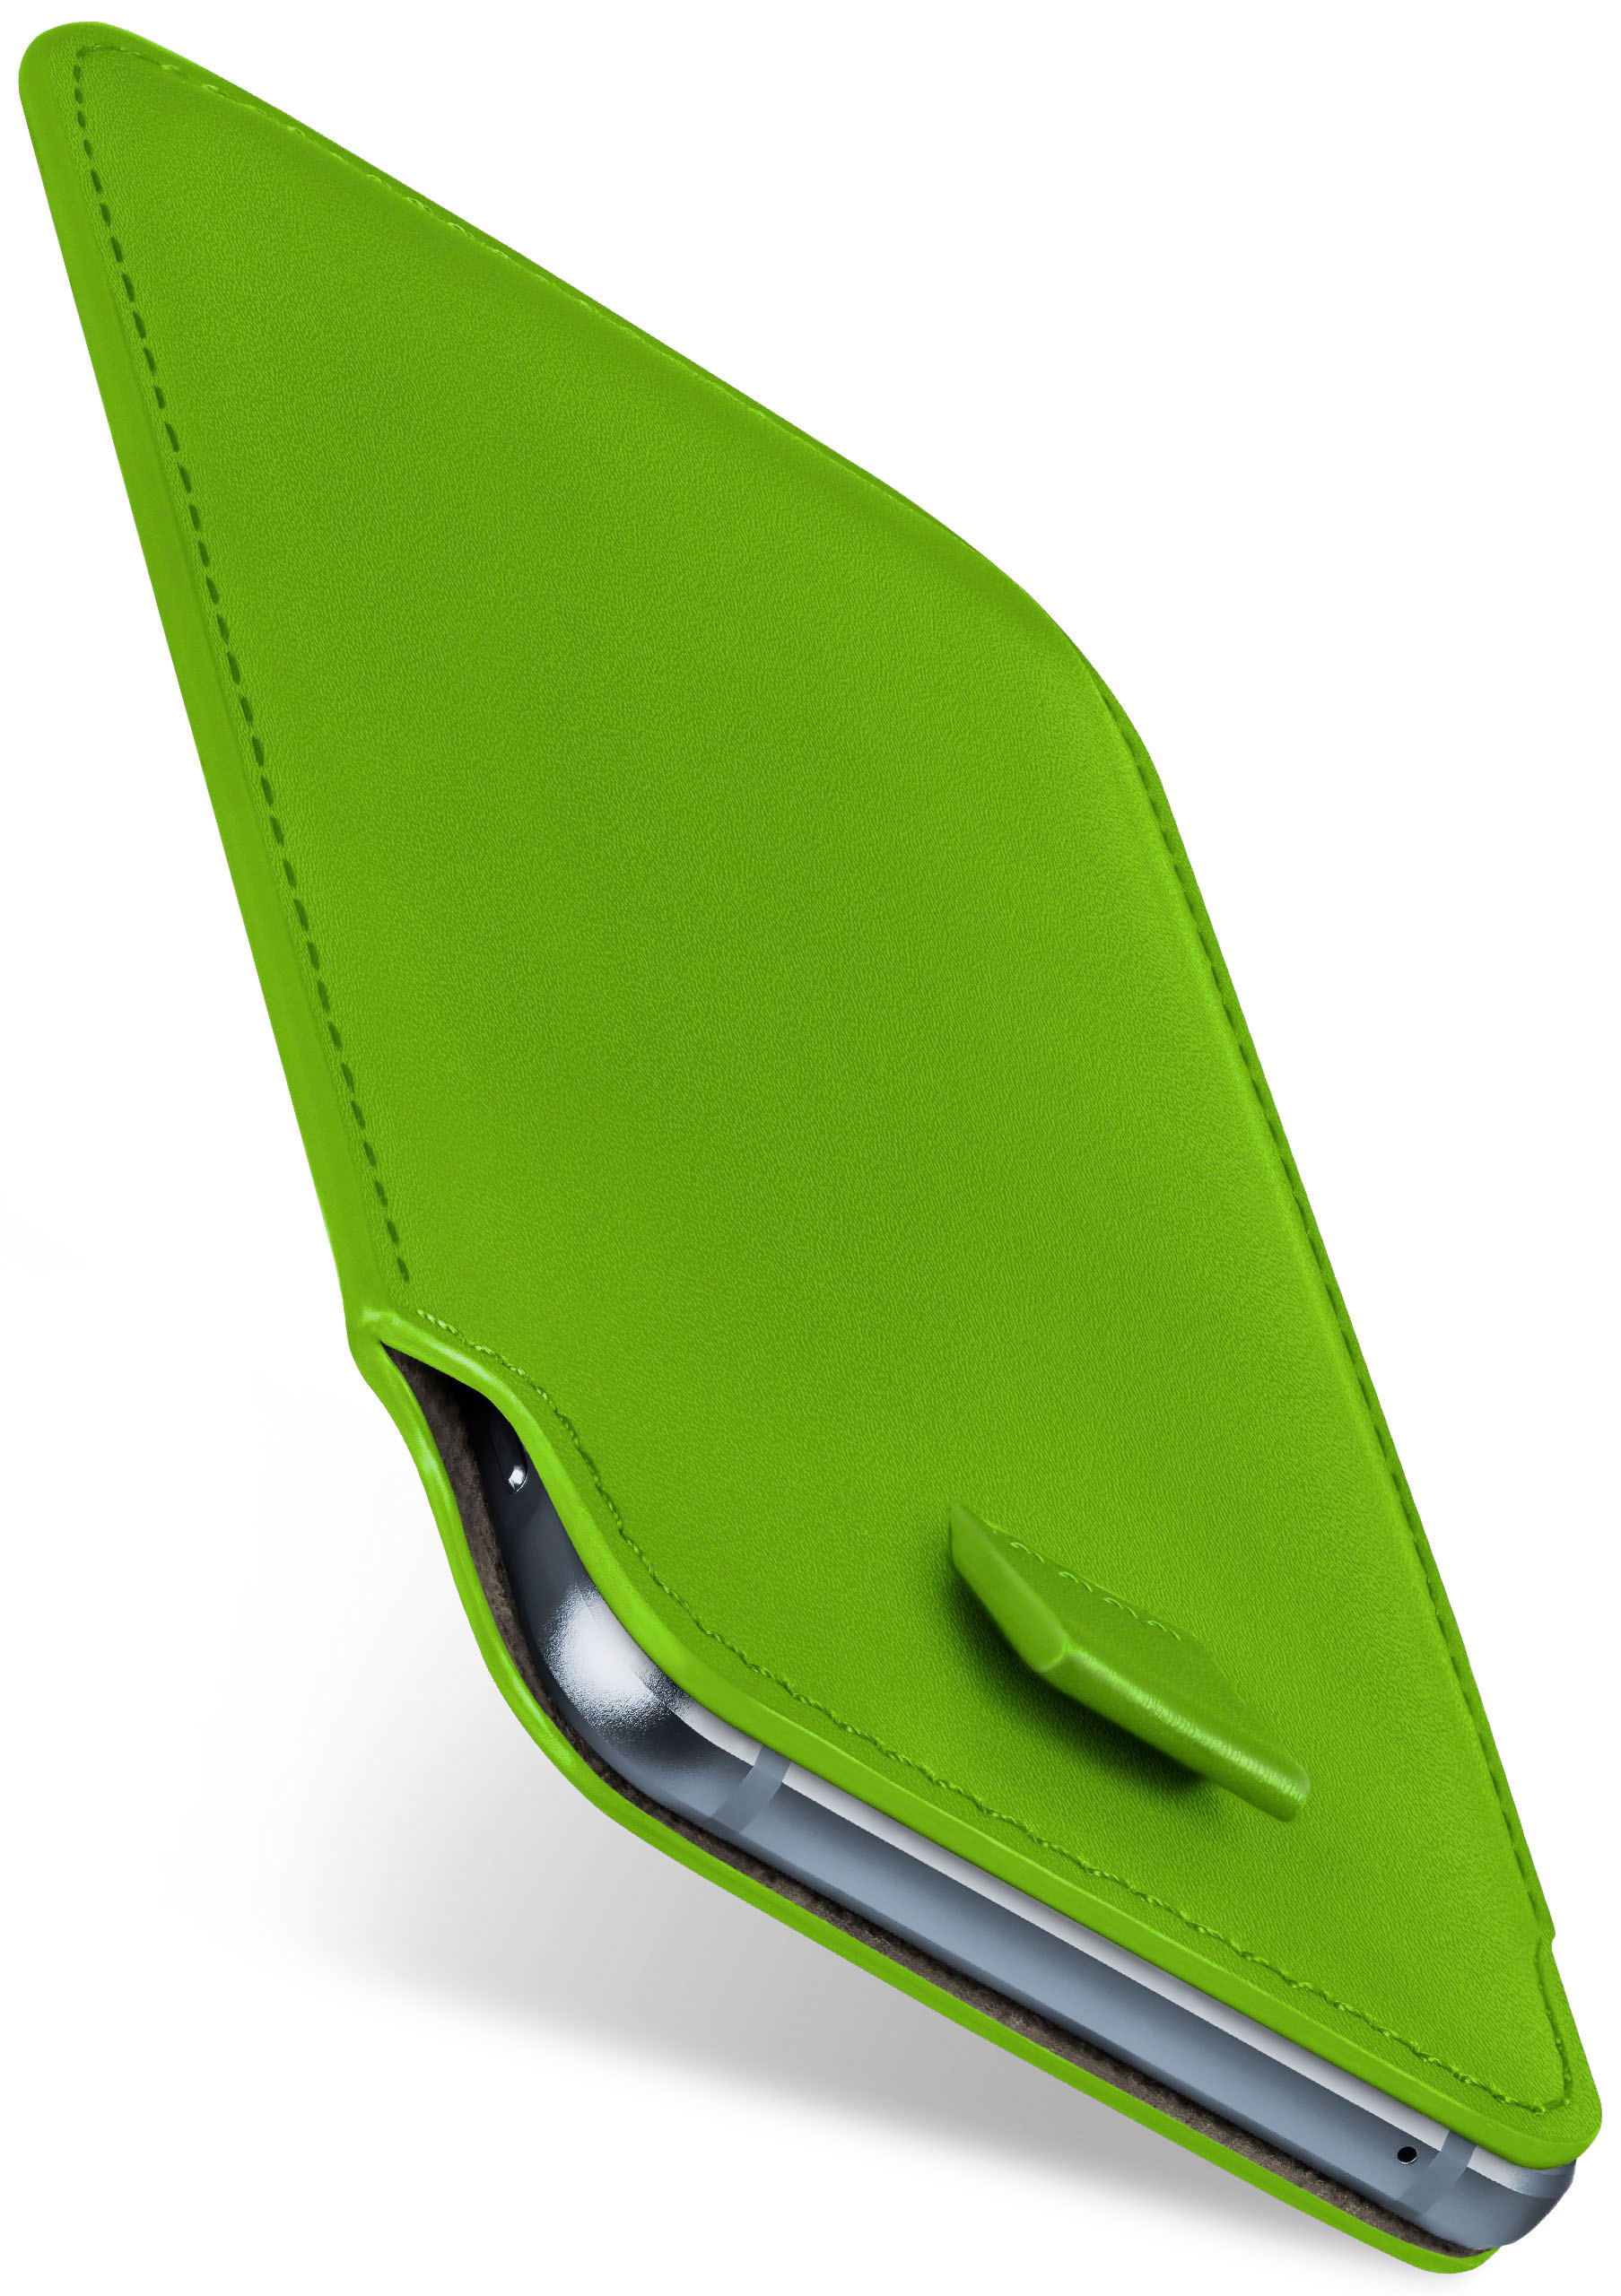 MOEX Slide LG, Lime-Green Cover, Case, Mach, Full X